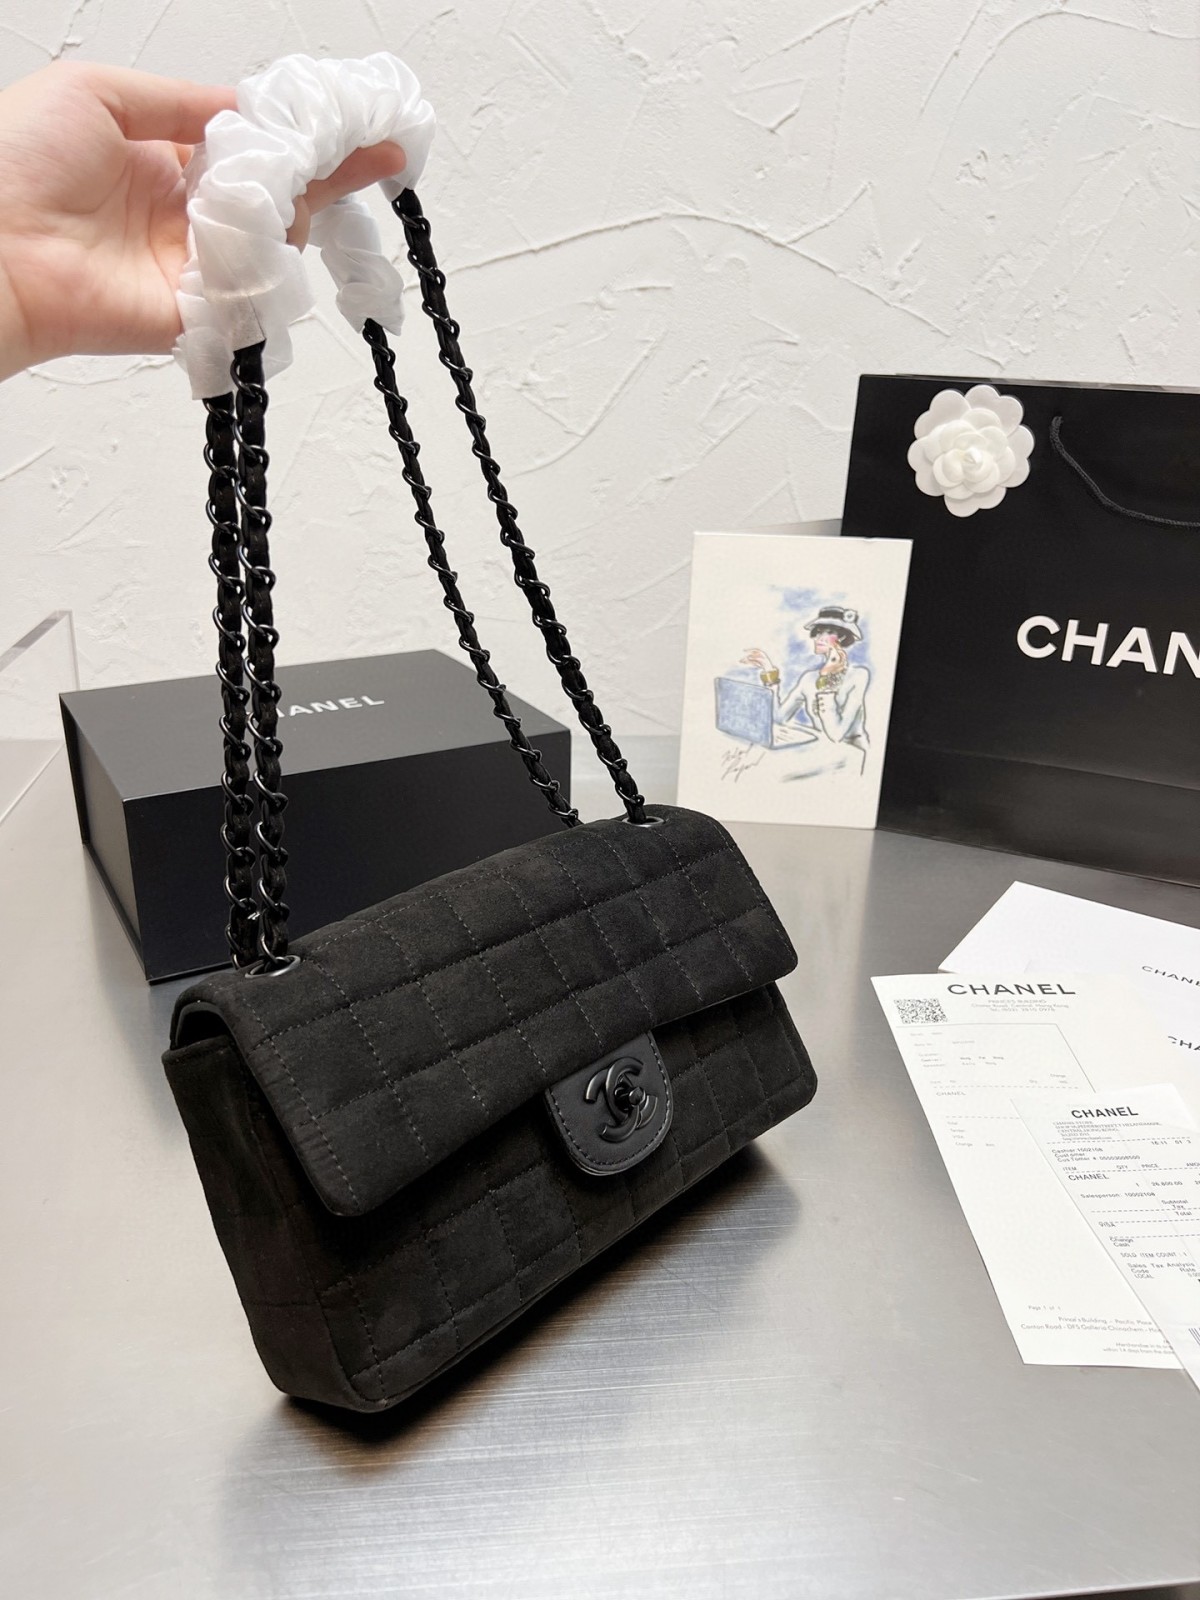 د غوره کیفیت نقل کڅوړه ټولګه: چینل (2022 تازه شوی)-Best Quality Fake Louis Vuitton Bag Online Store, Replica designer bag ru